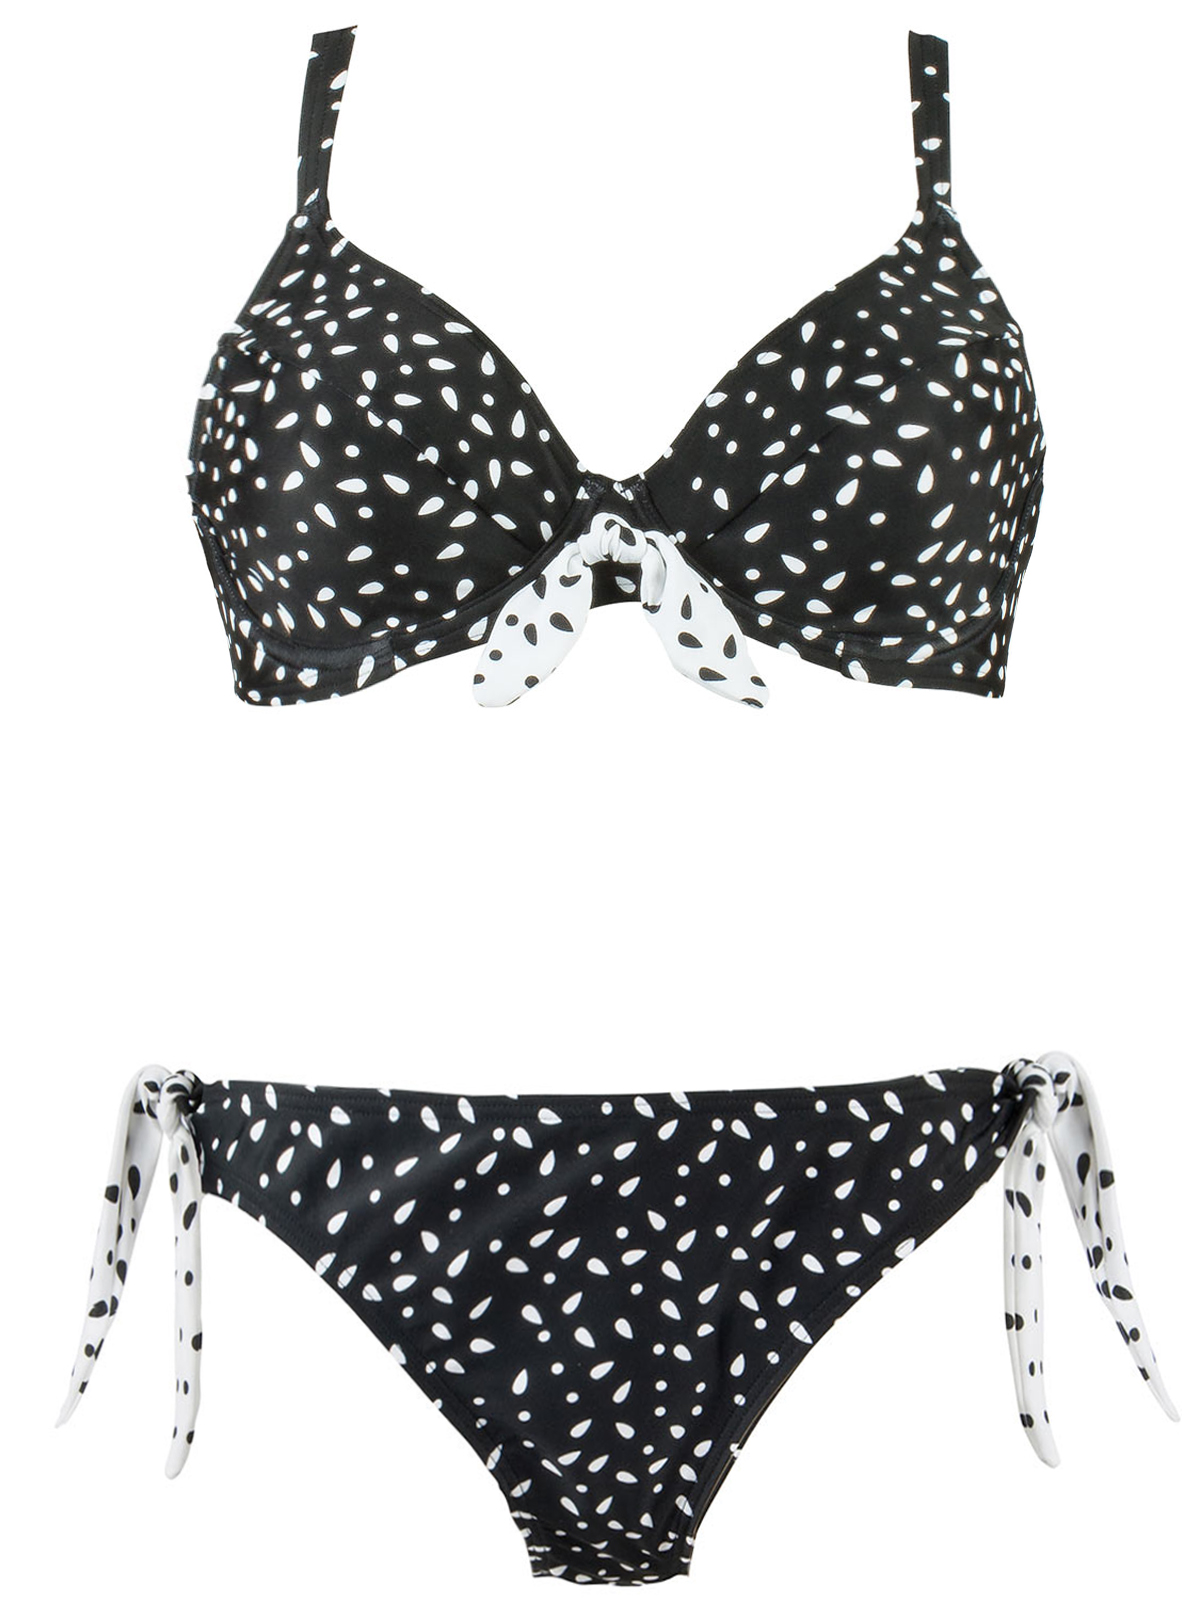 Naturana - - Naturana BLACK Polka Dot Tie Side Wired Bikini Set - Size ...